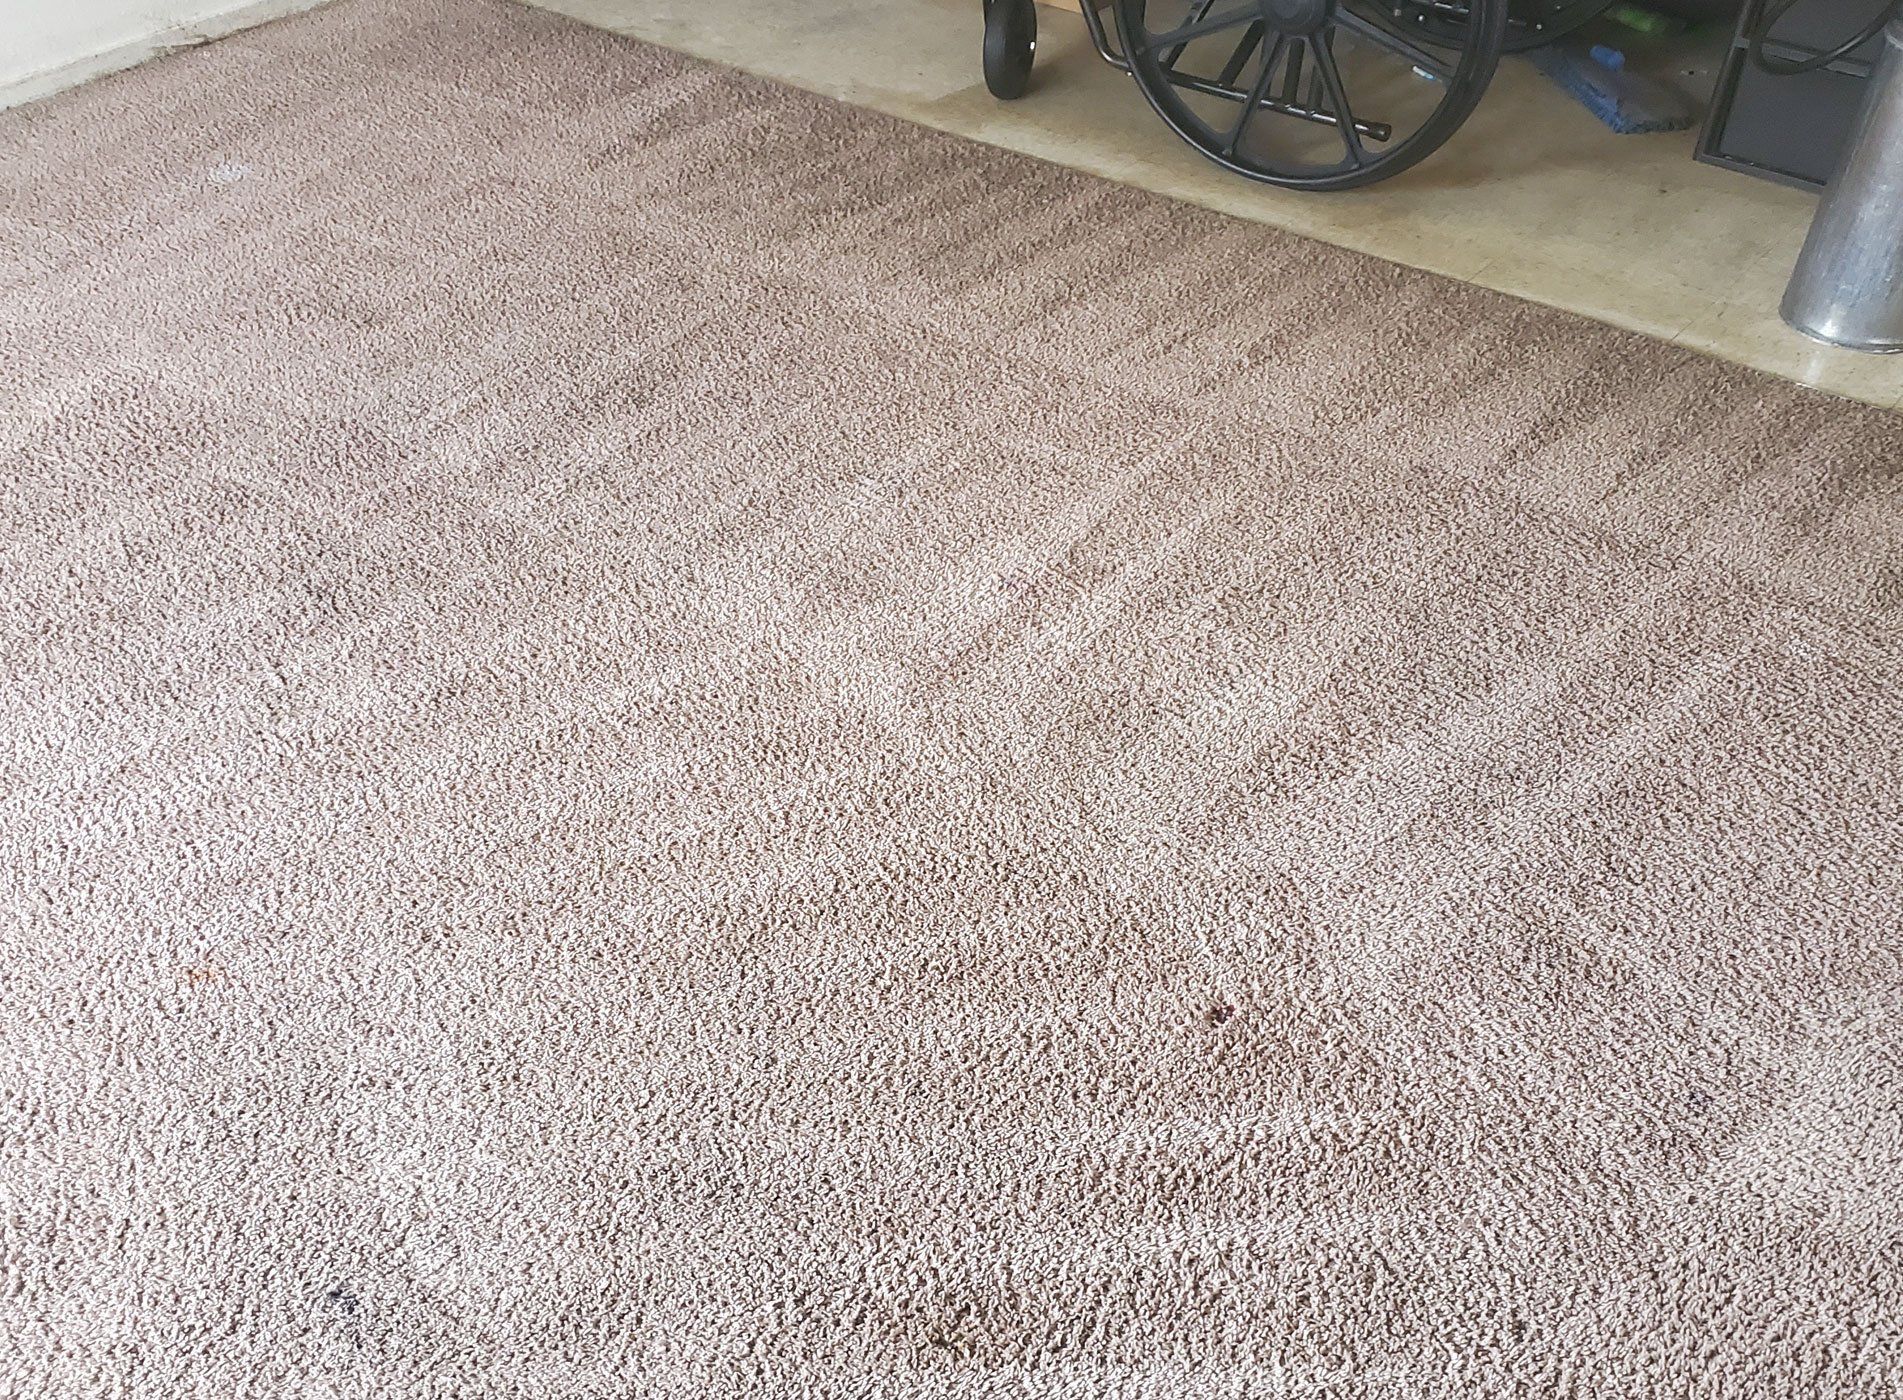 carpet cleaning fresno 1